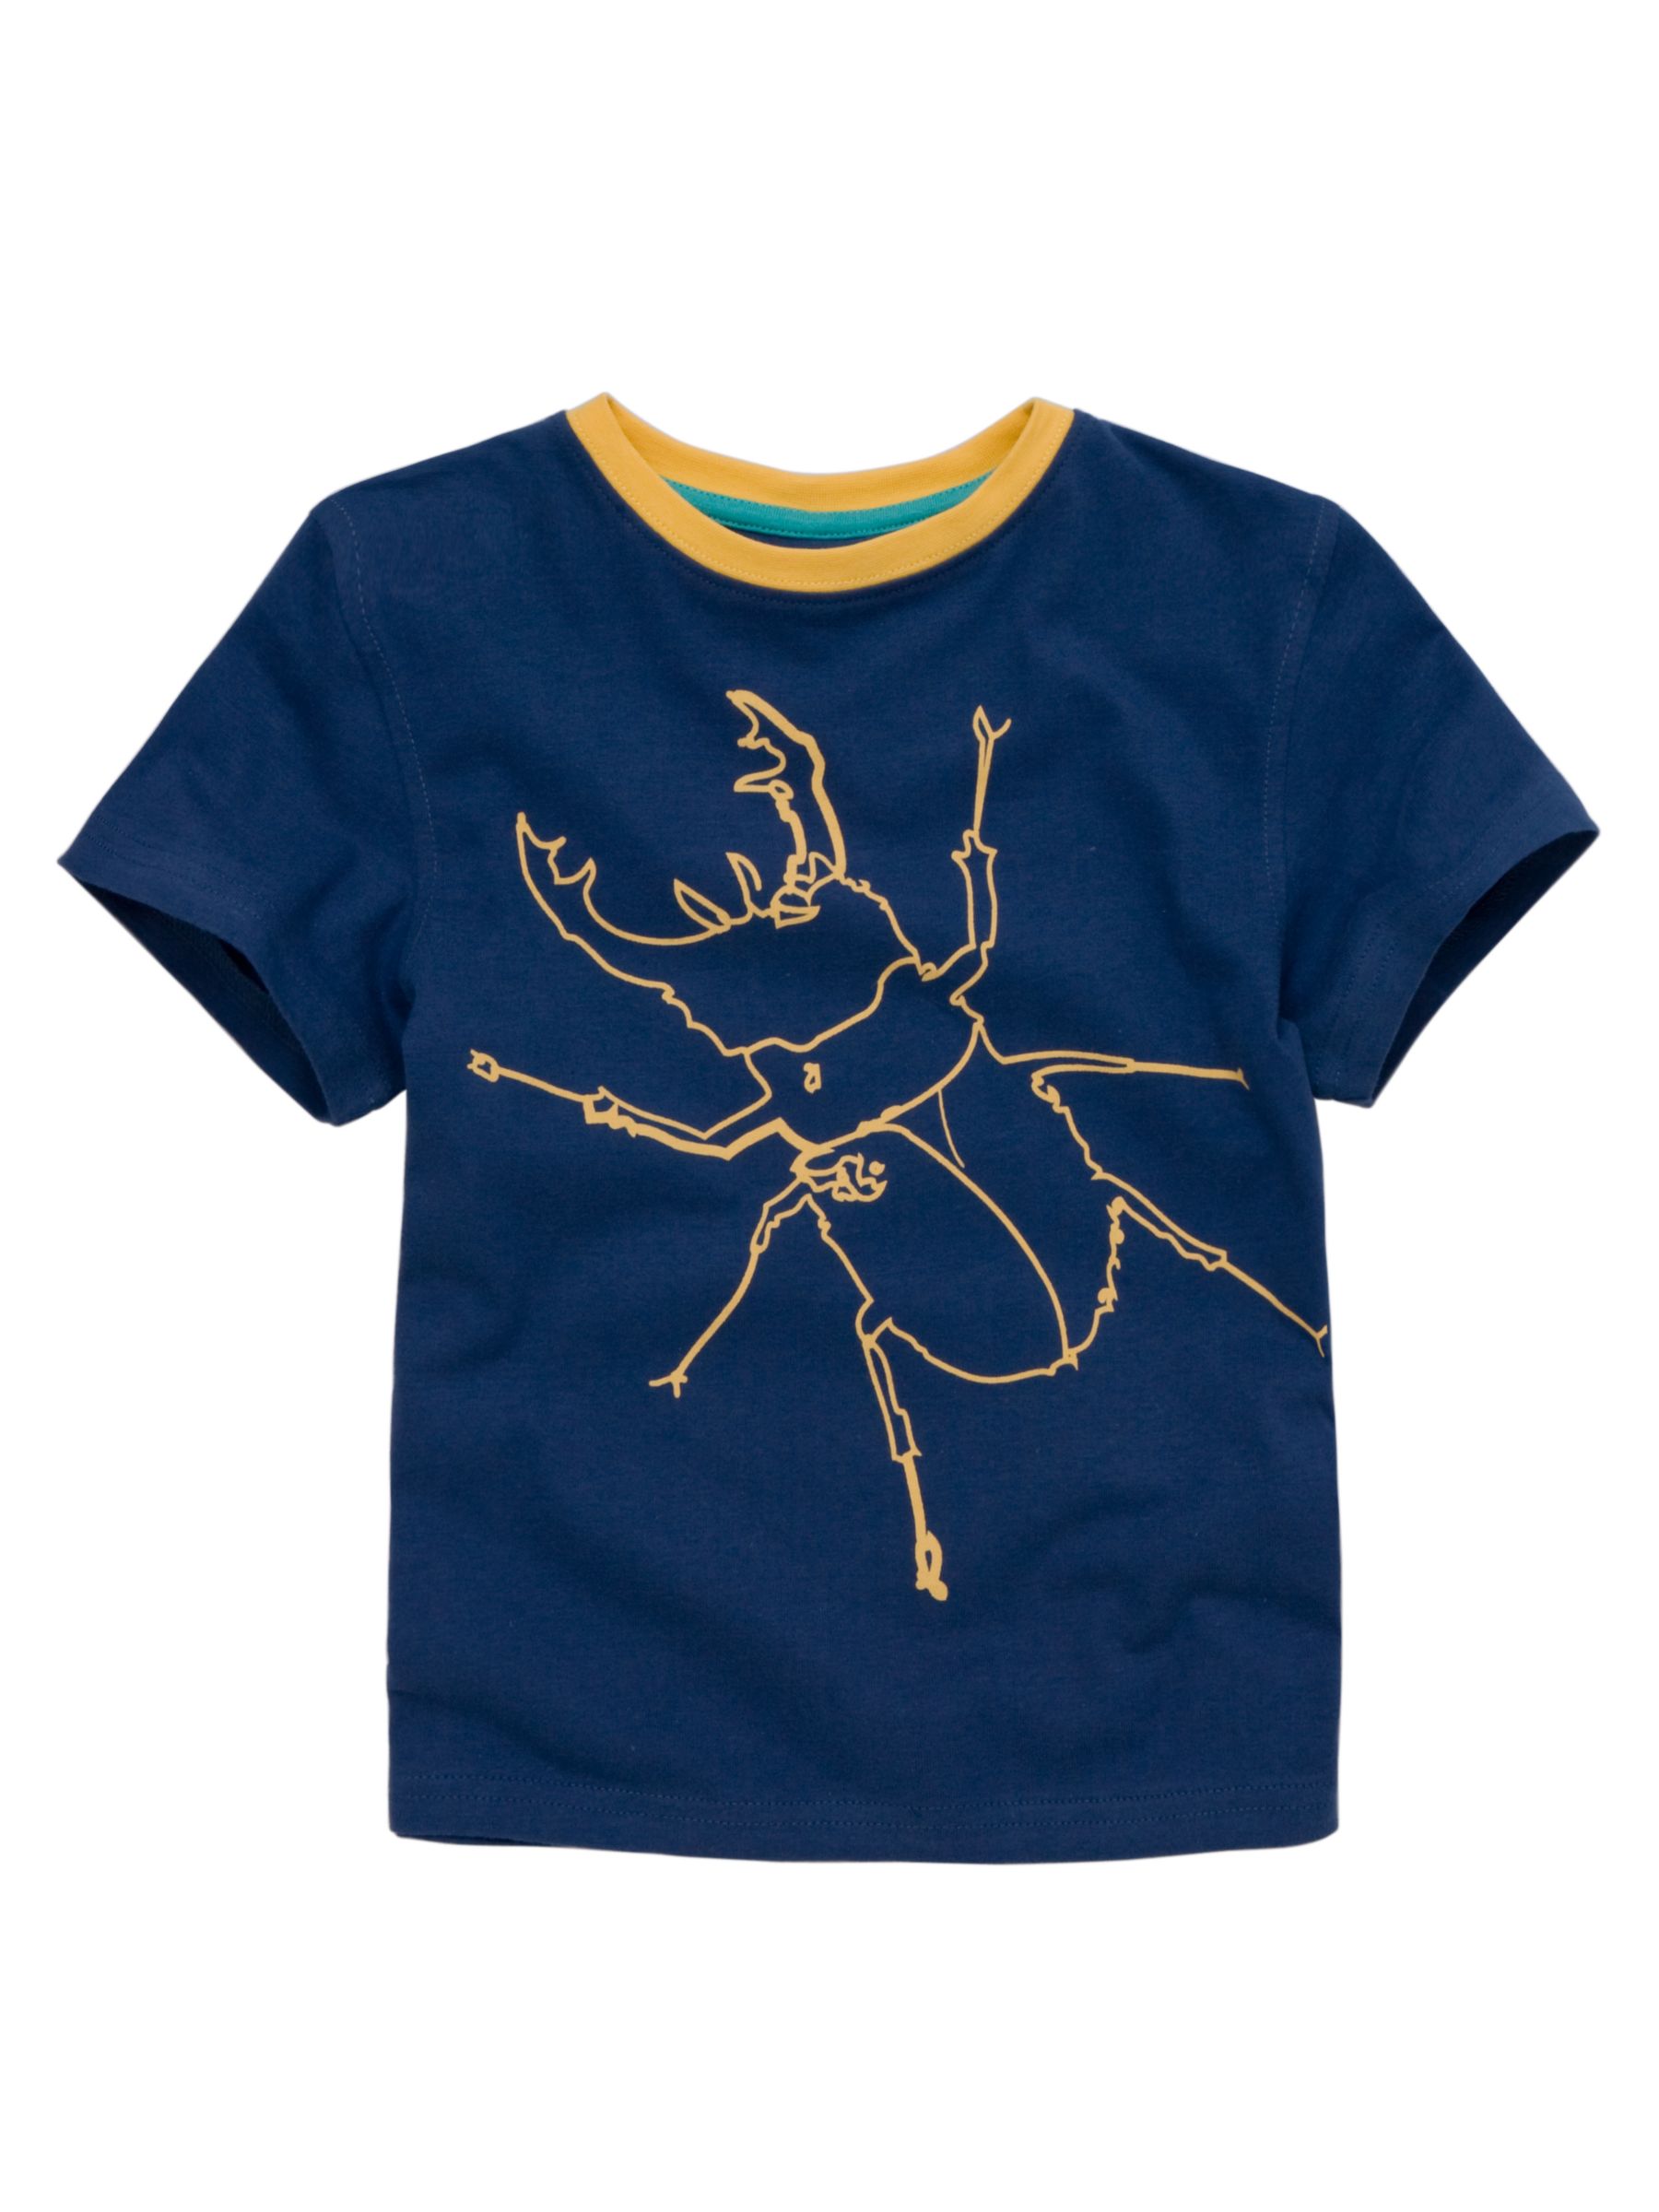 John Lewis Boy Beetle T-Shirt, Navy blue, 7 years